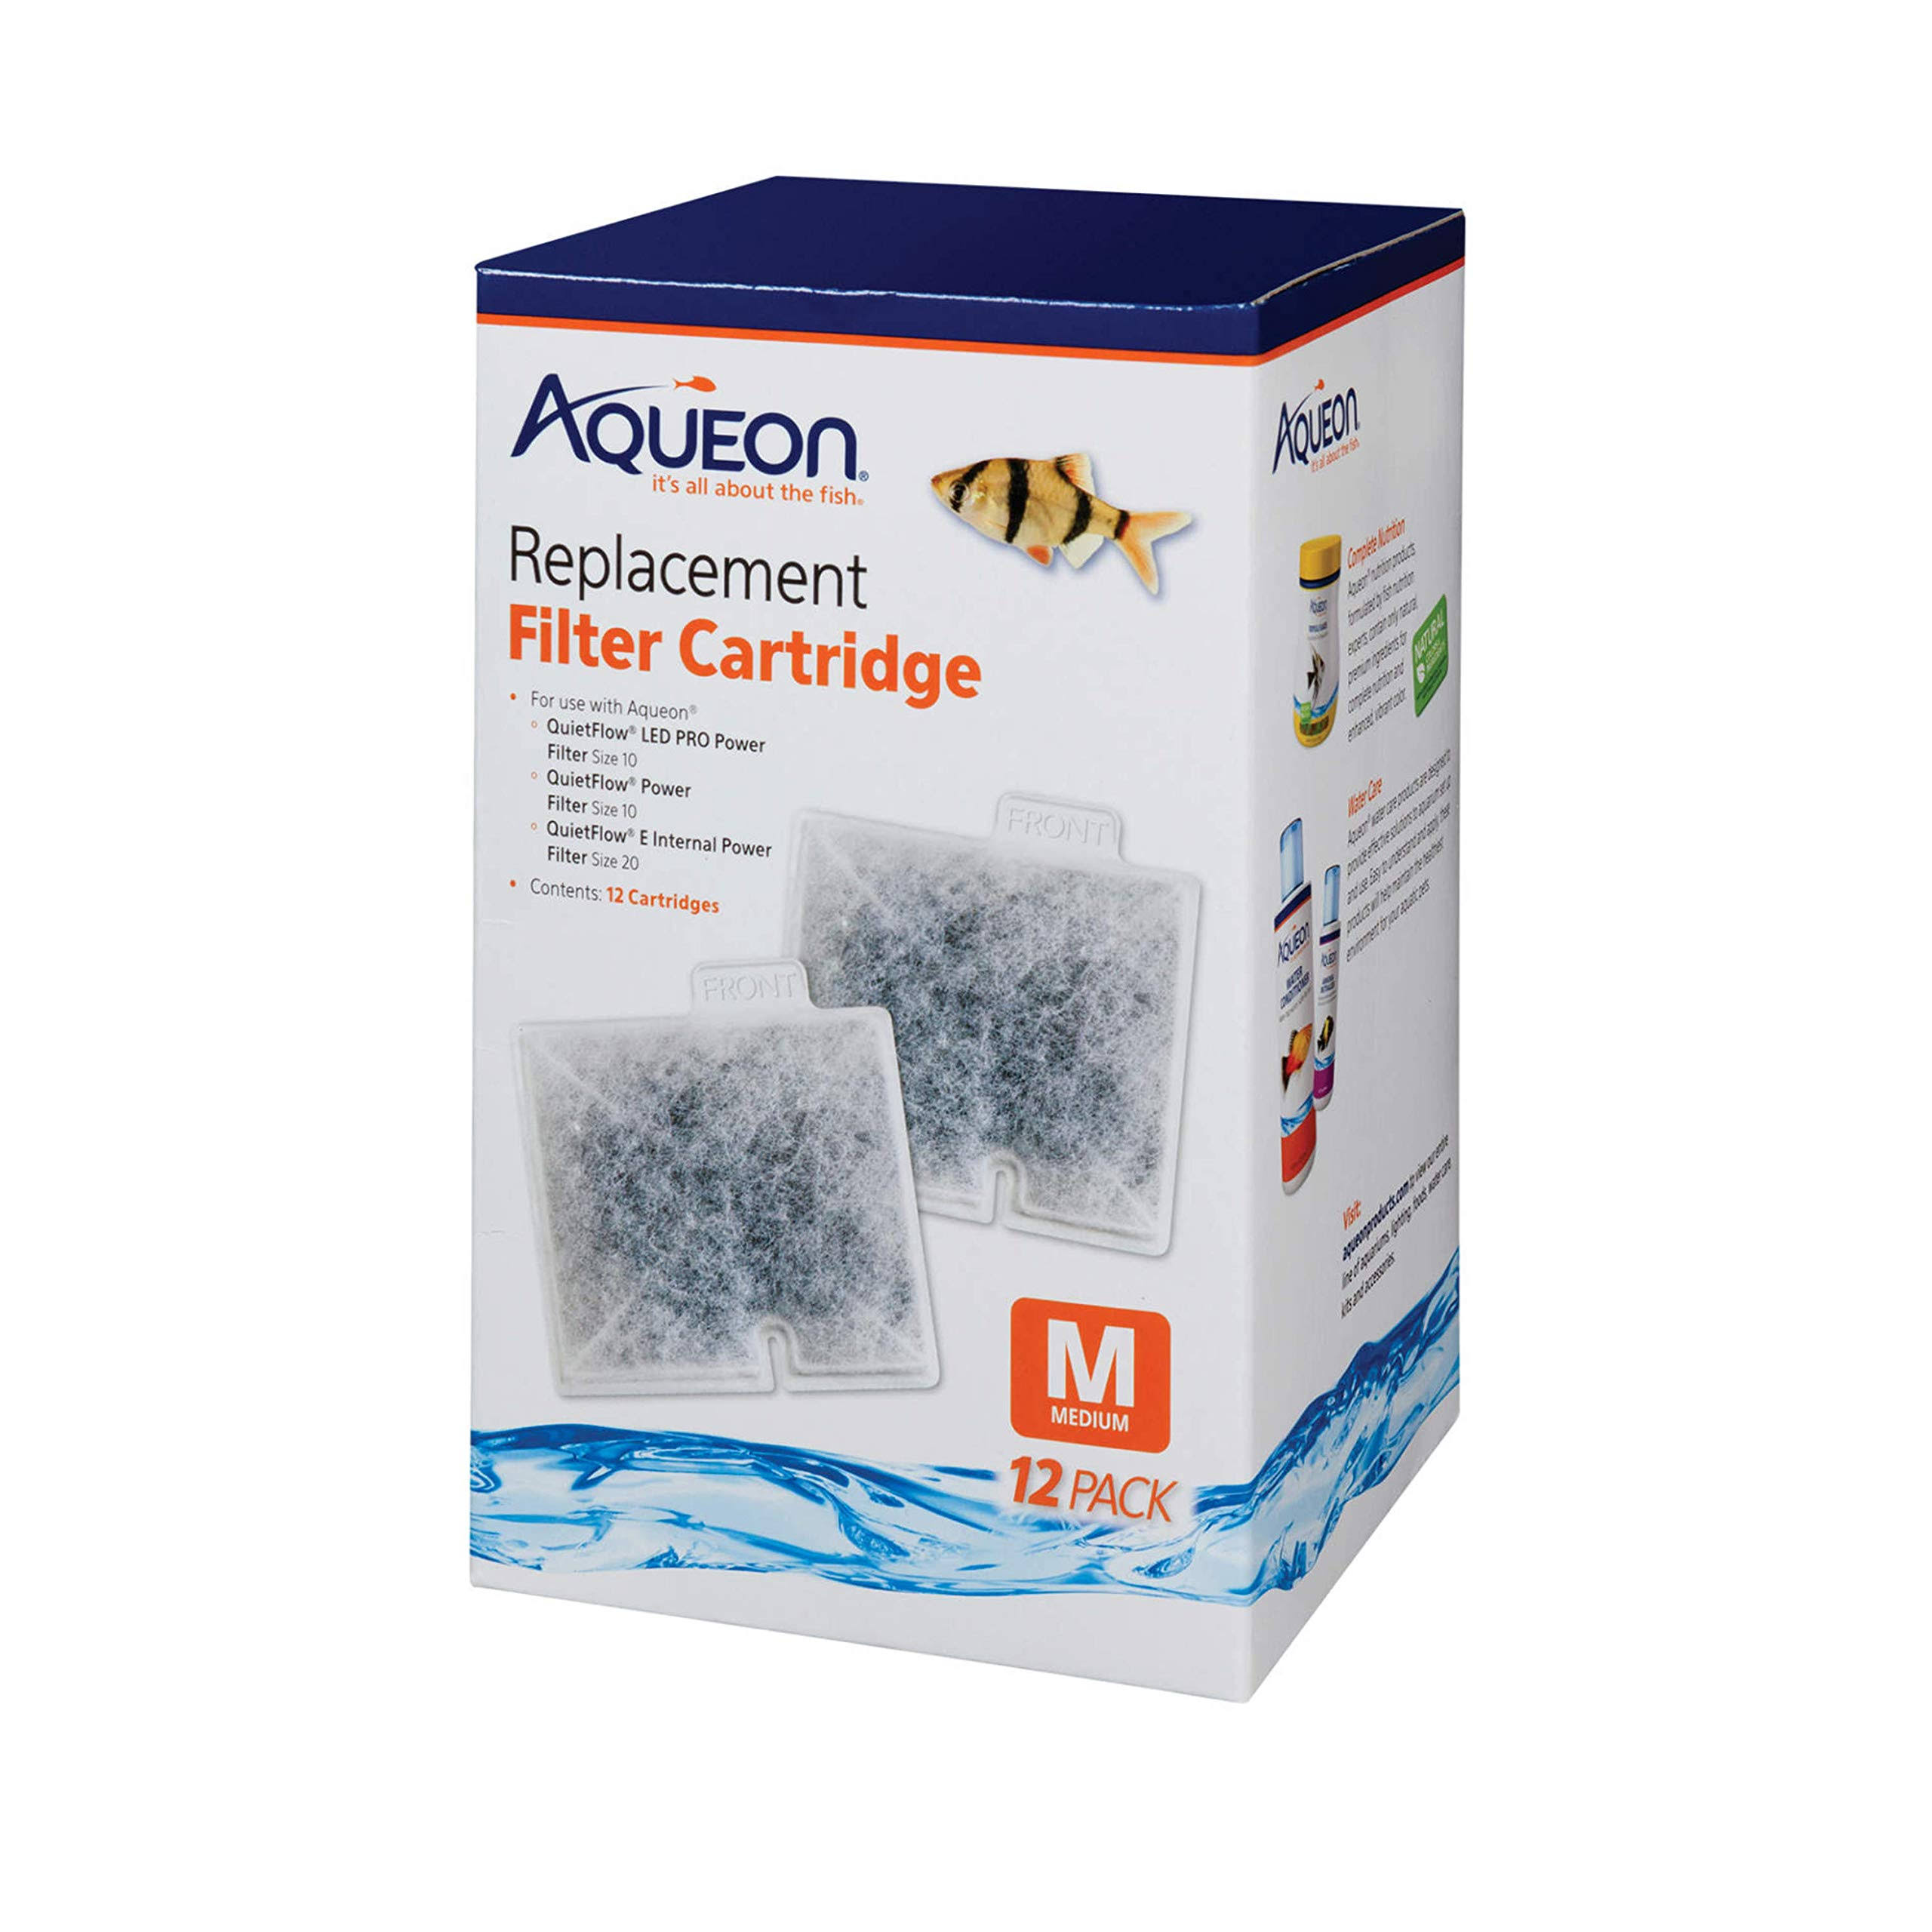 Aqueon Replacement Filter Cartridges - Medium, 12 Pack